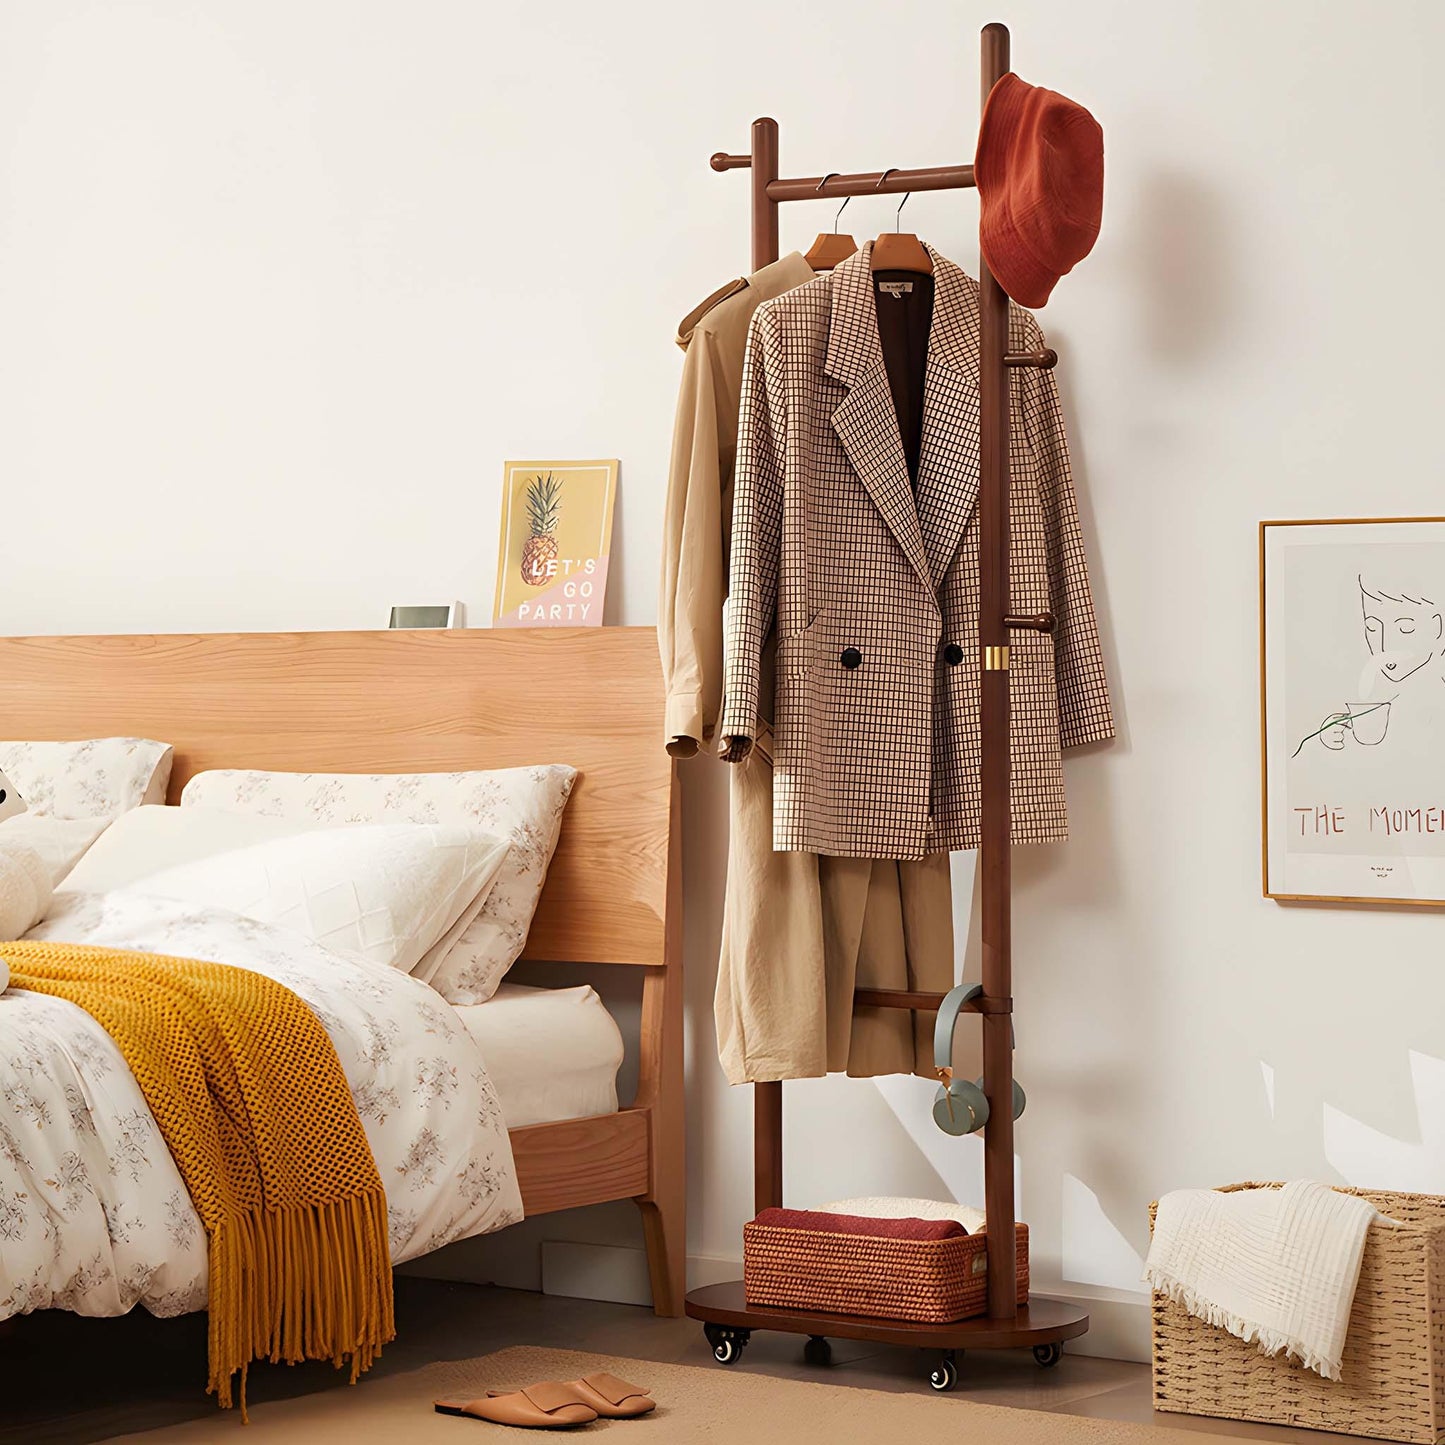 Rustic Wooden Clothes Rack - Bedroom Organization